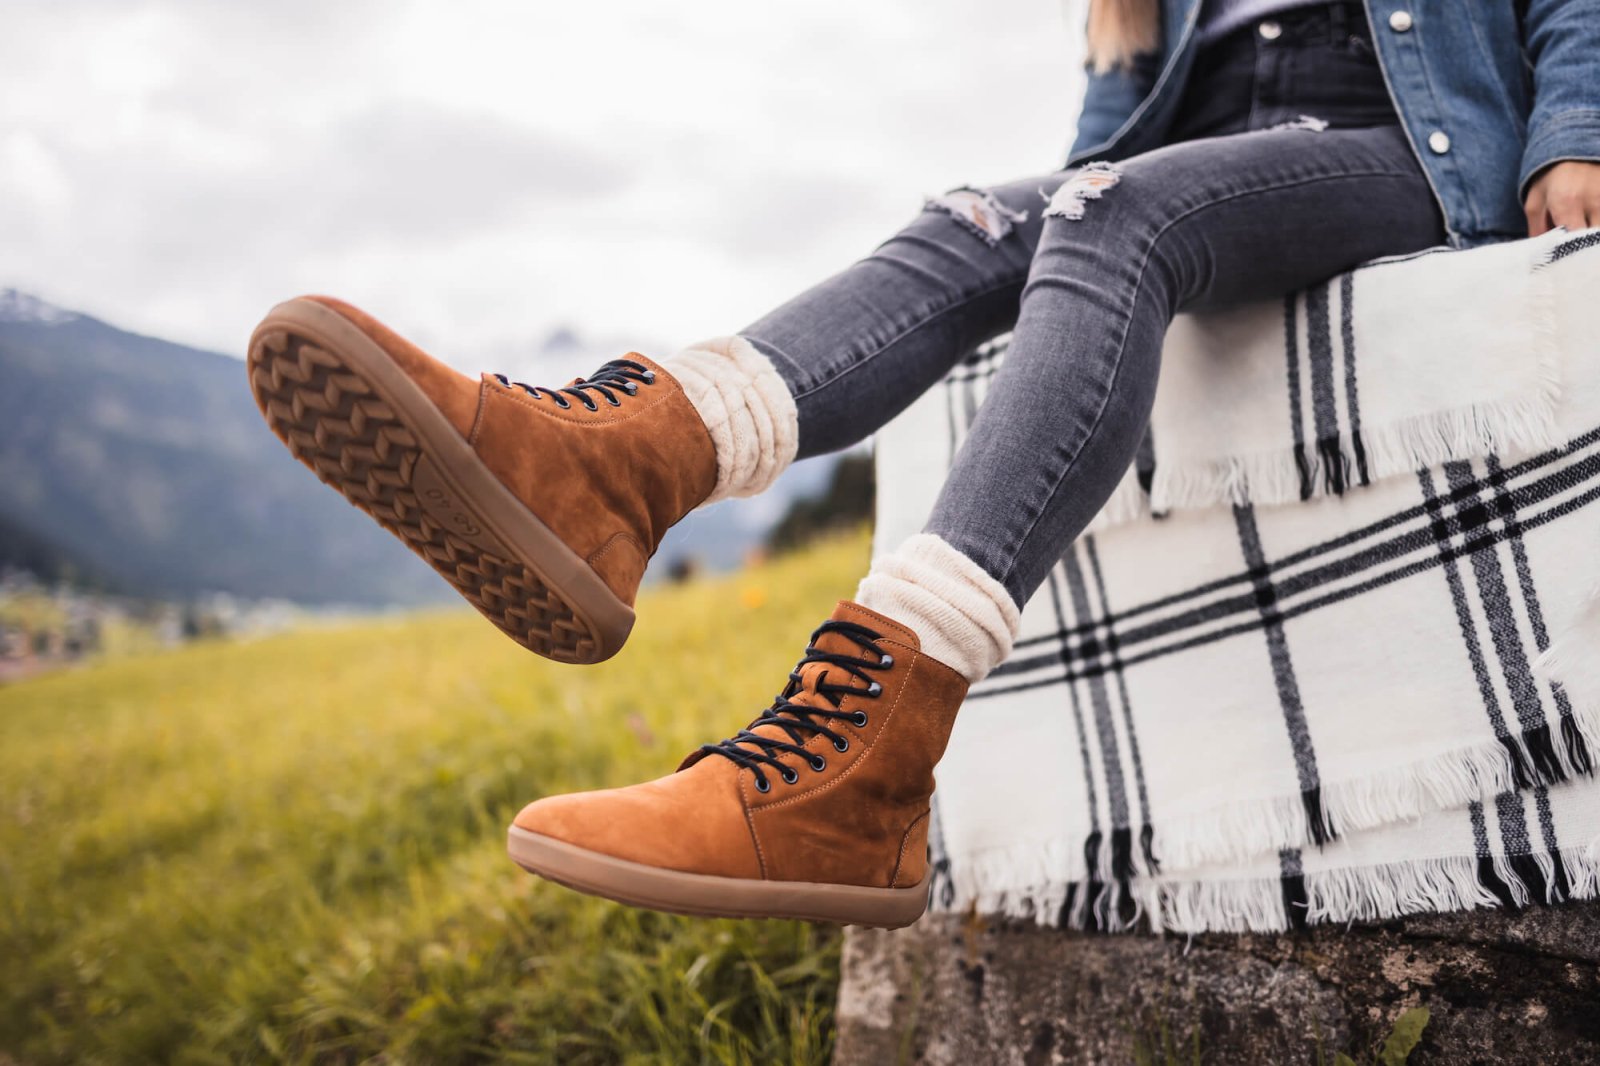 Calzado Barefoot para Mujer: características, beneficios y consejos –  Barefoot You